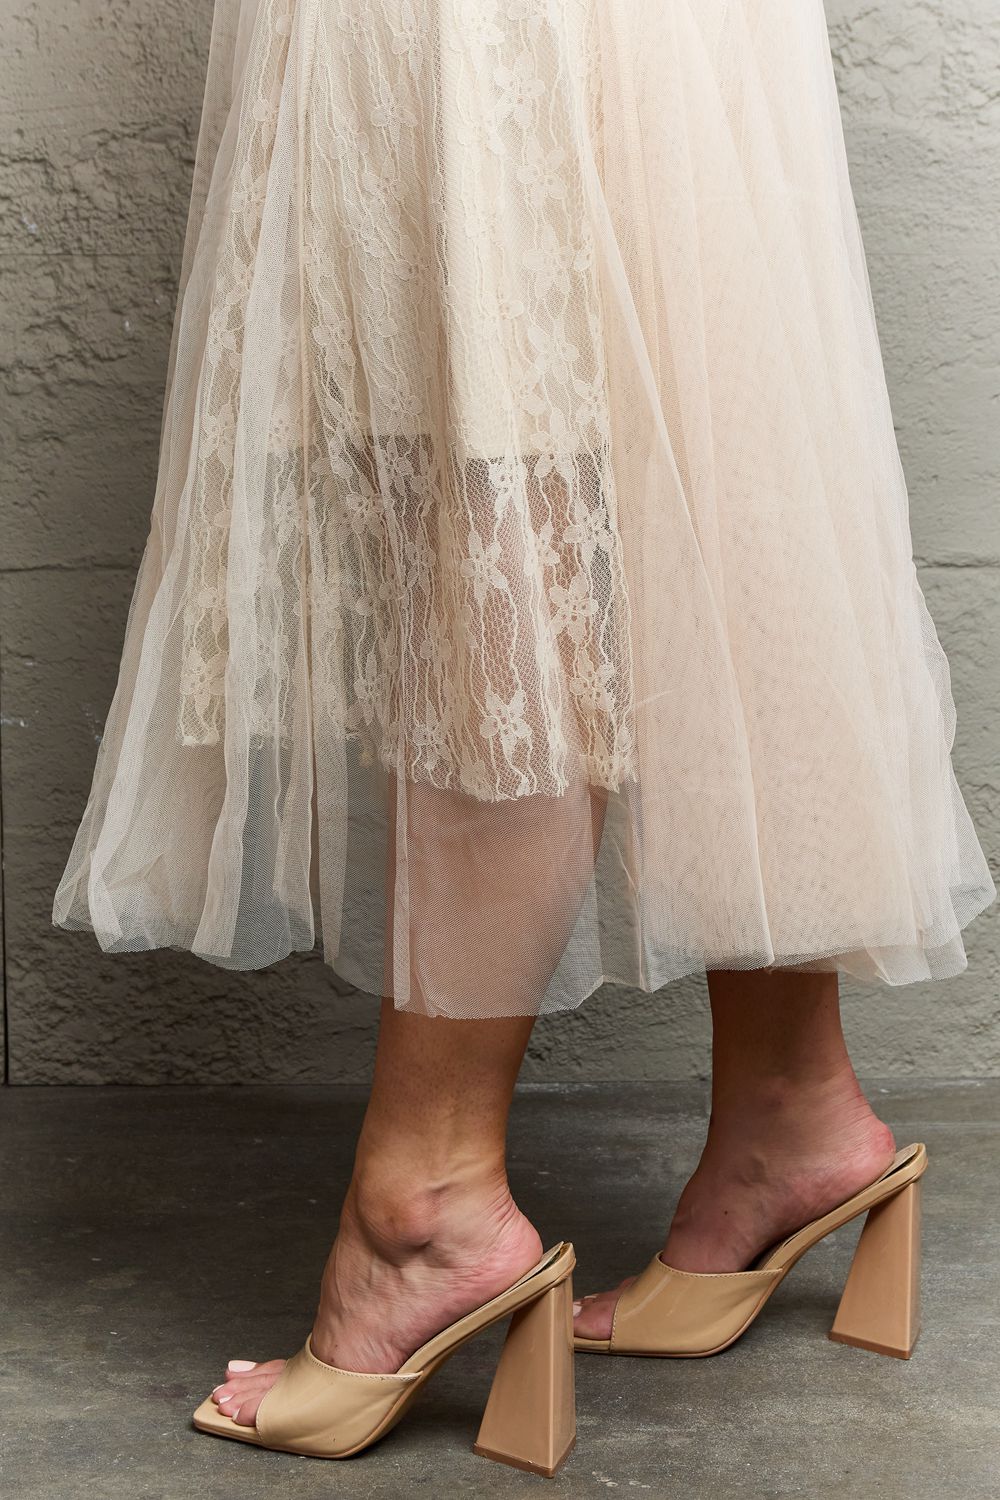 Lace Flowy Midi Skirt